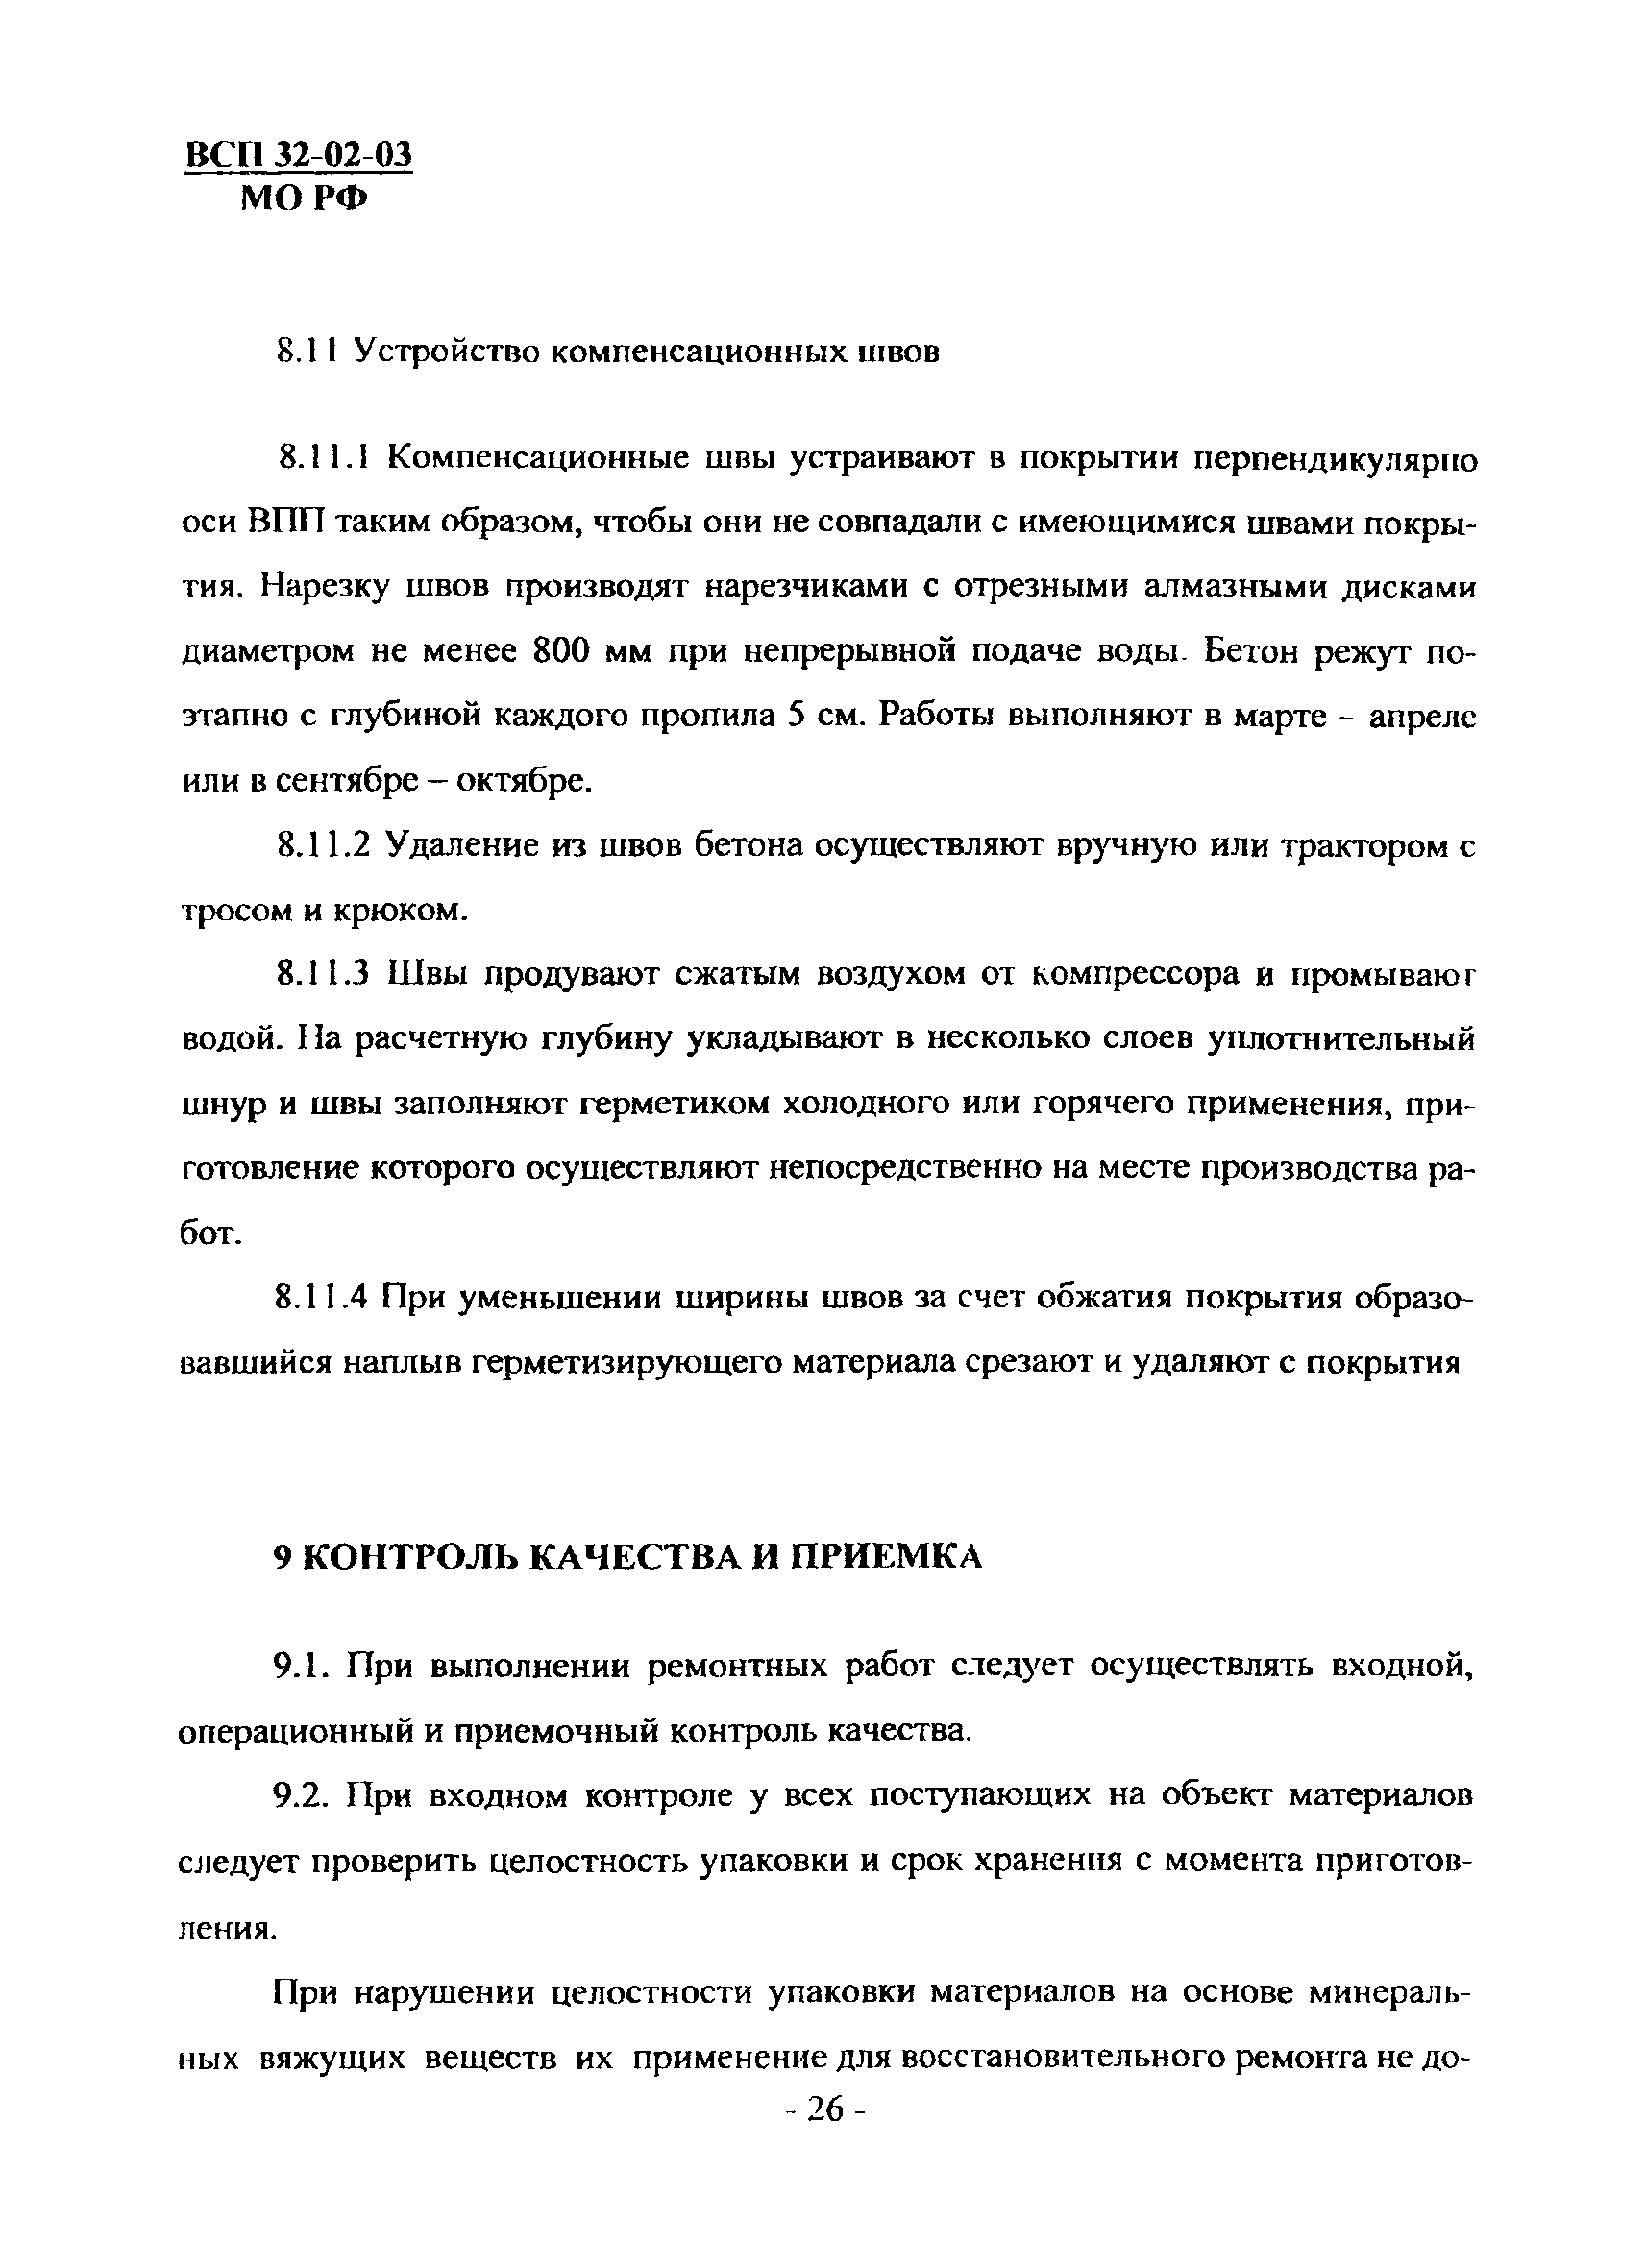 ВСП 32-02-03 МО РФ